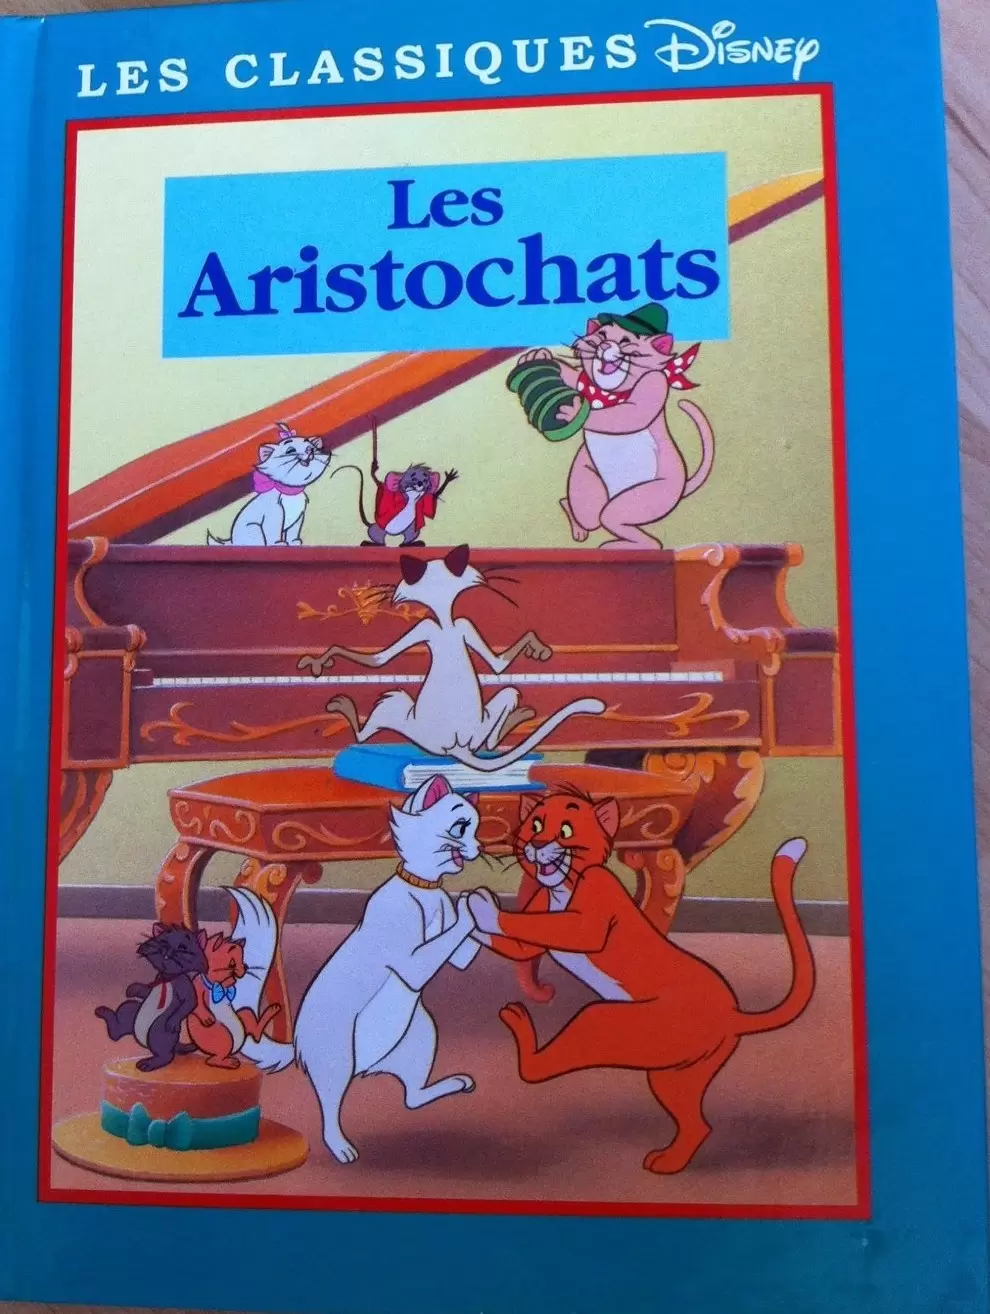 Les Classiques Disney - Edition France Loisirs - Les aristochats